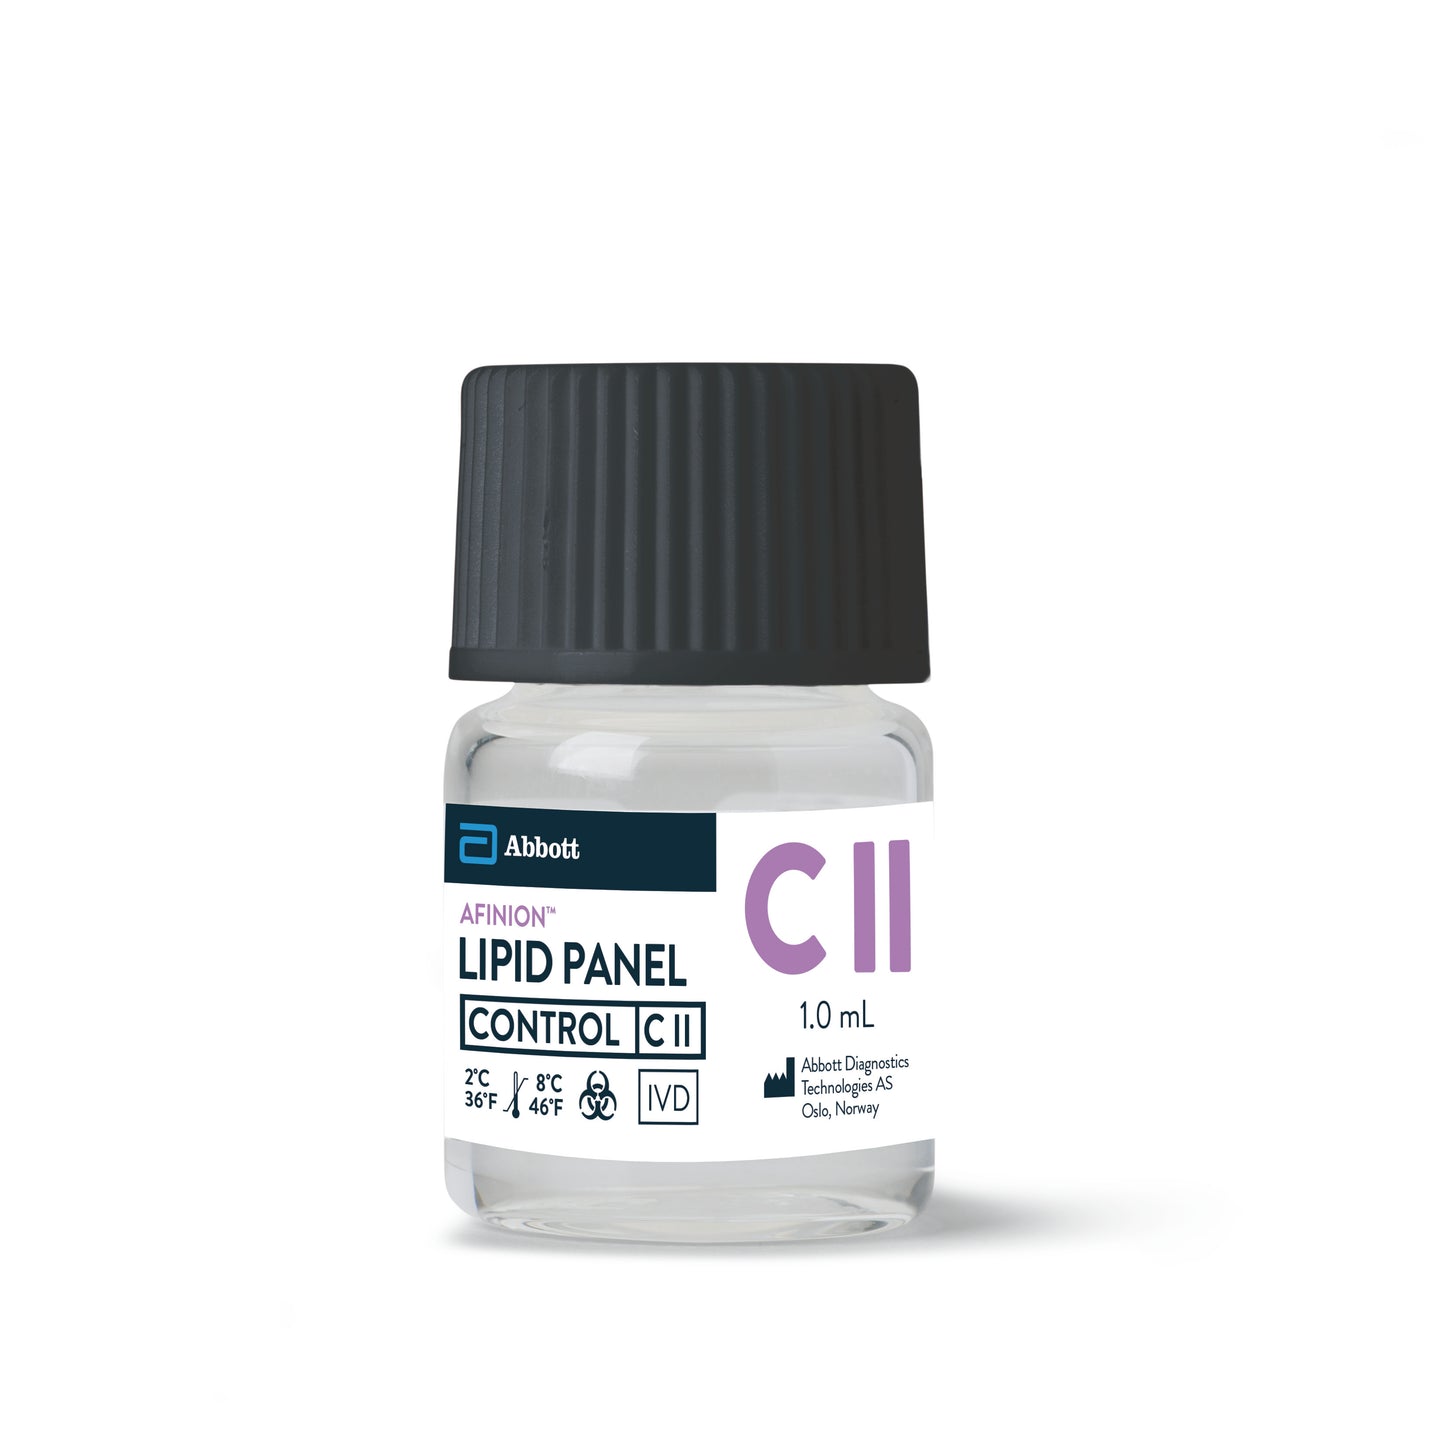 Afinion Lipid Panel Control